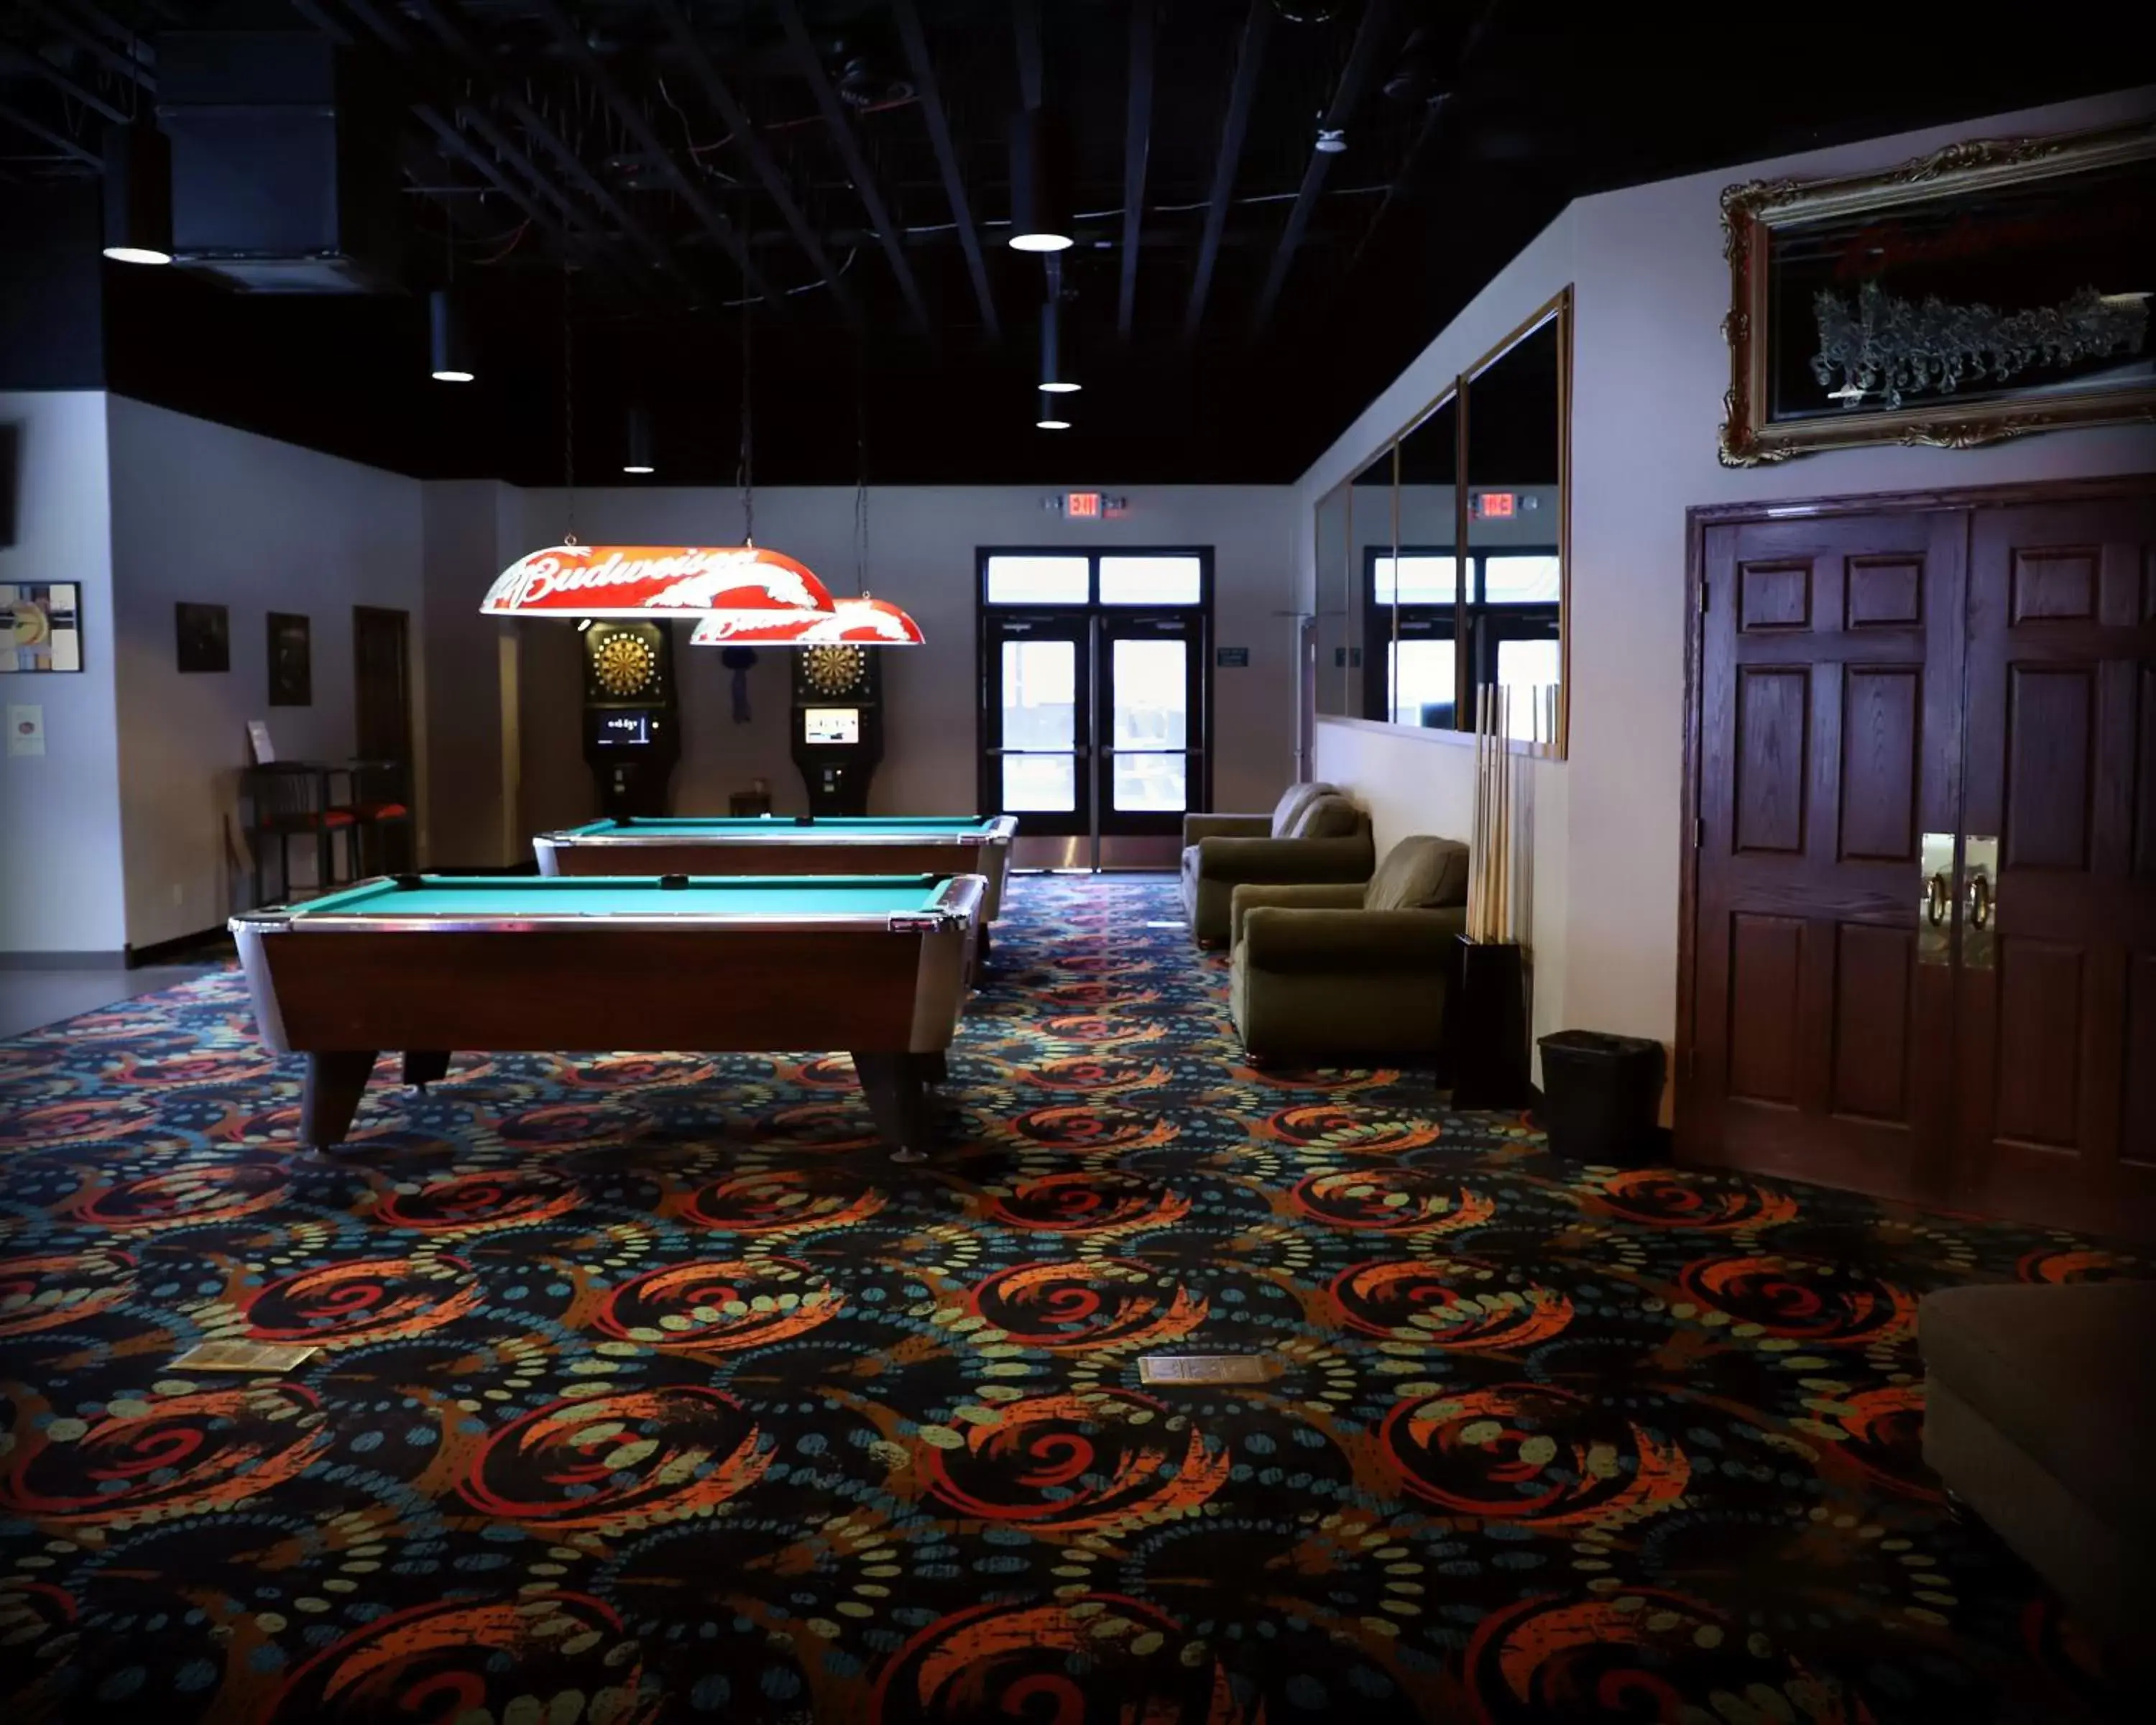 Game Room, Billiards in Comfort Inn & Suites Hotel in the Black Hills